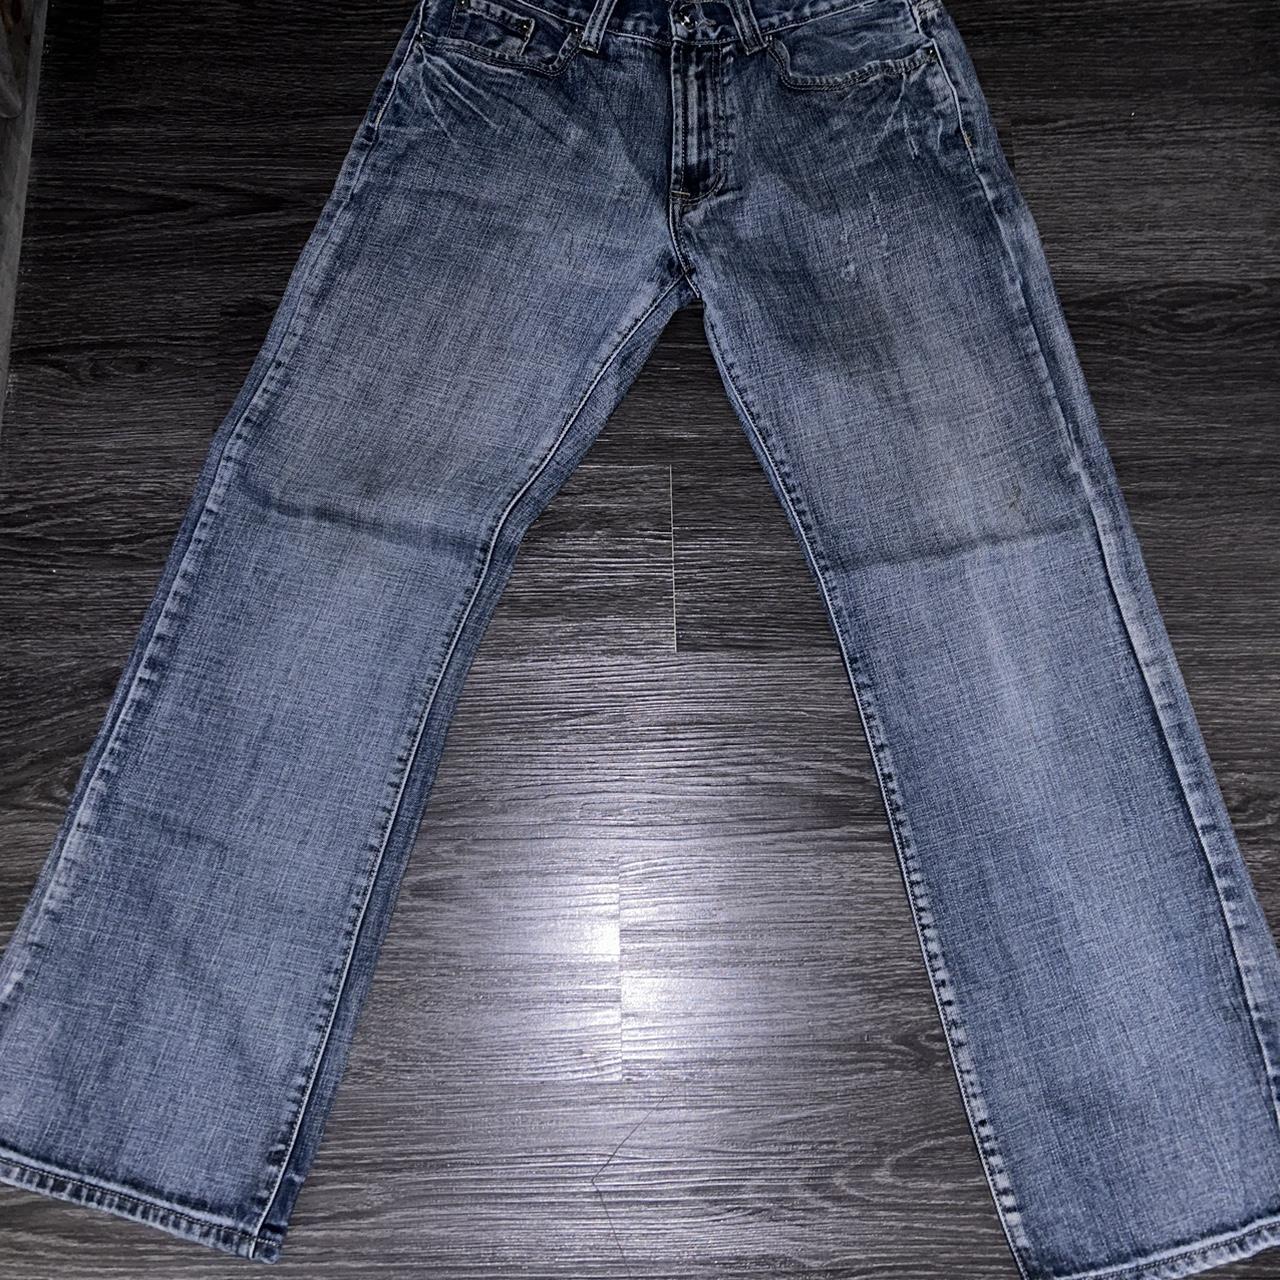 Helix Bootcut jeans size 30x32 #bootcut #cross... - Depop